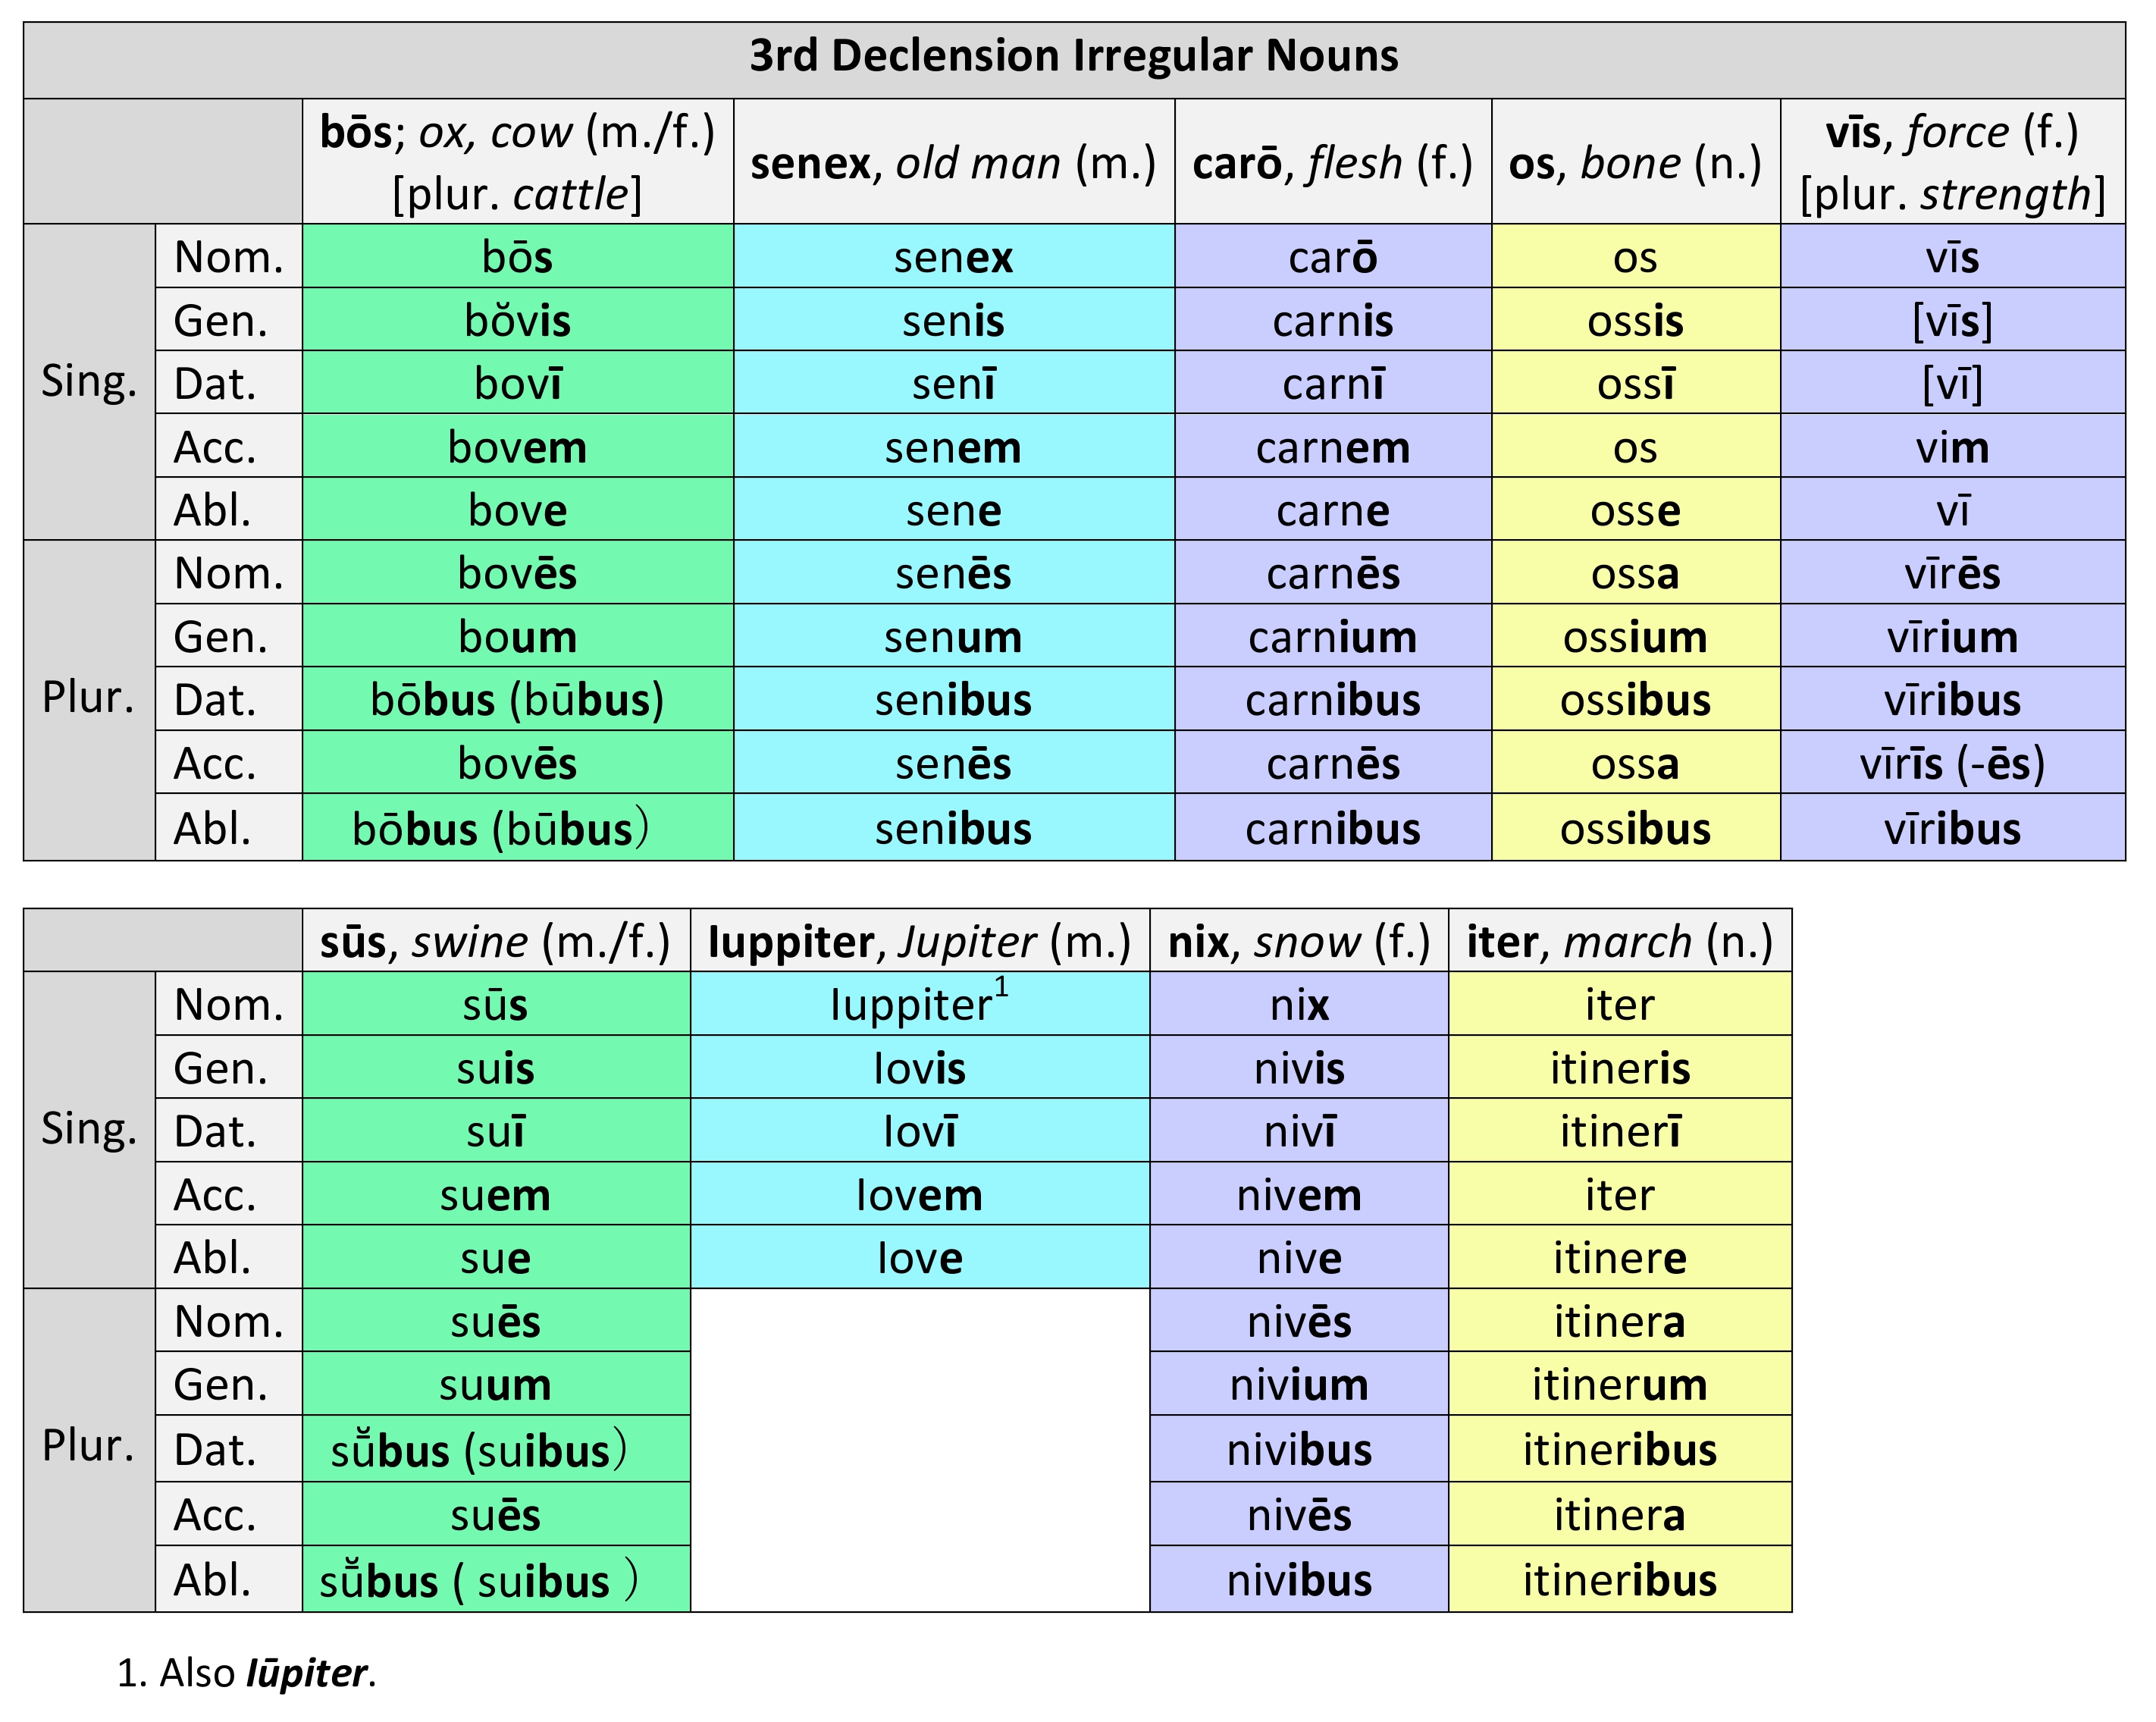 Paradigm for 3rd declension irregular nouns 